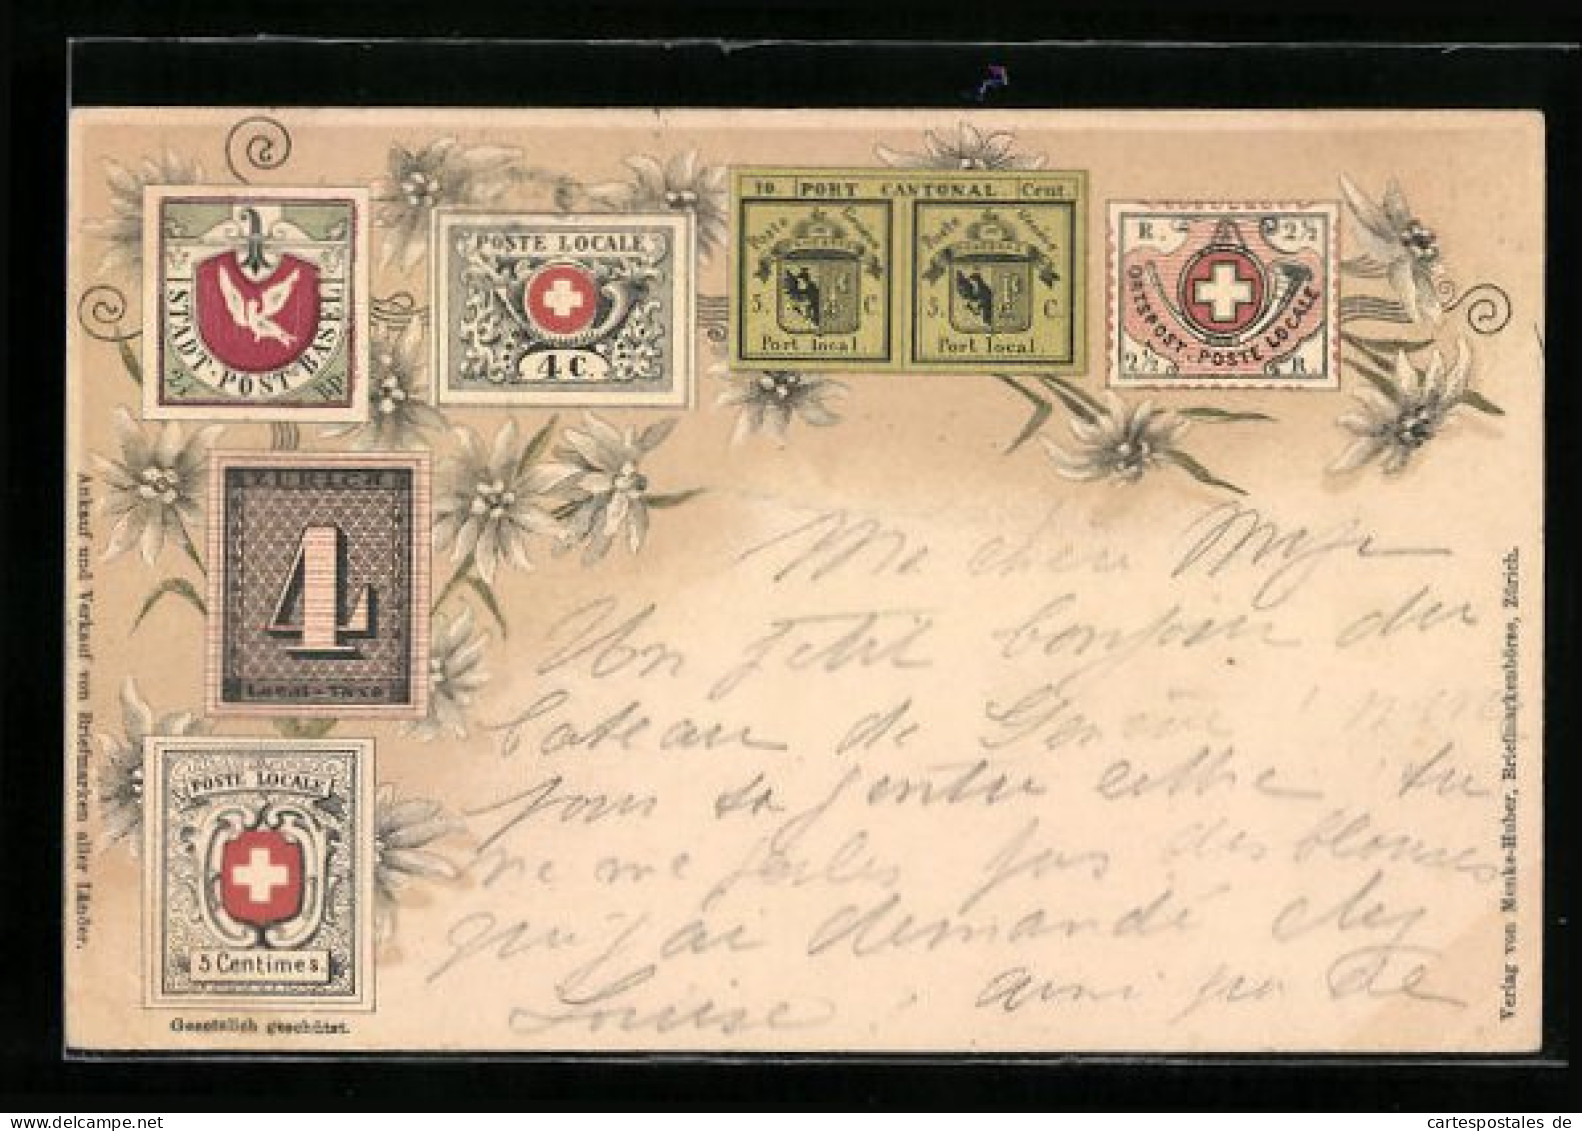 Lithographie Schweizer Briefmarken, Edelweiss  - Timbres (représentations)